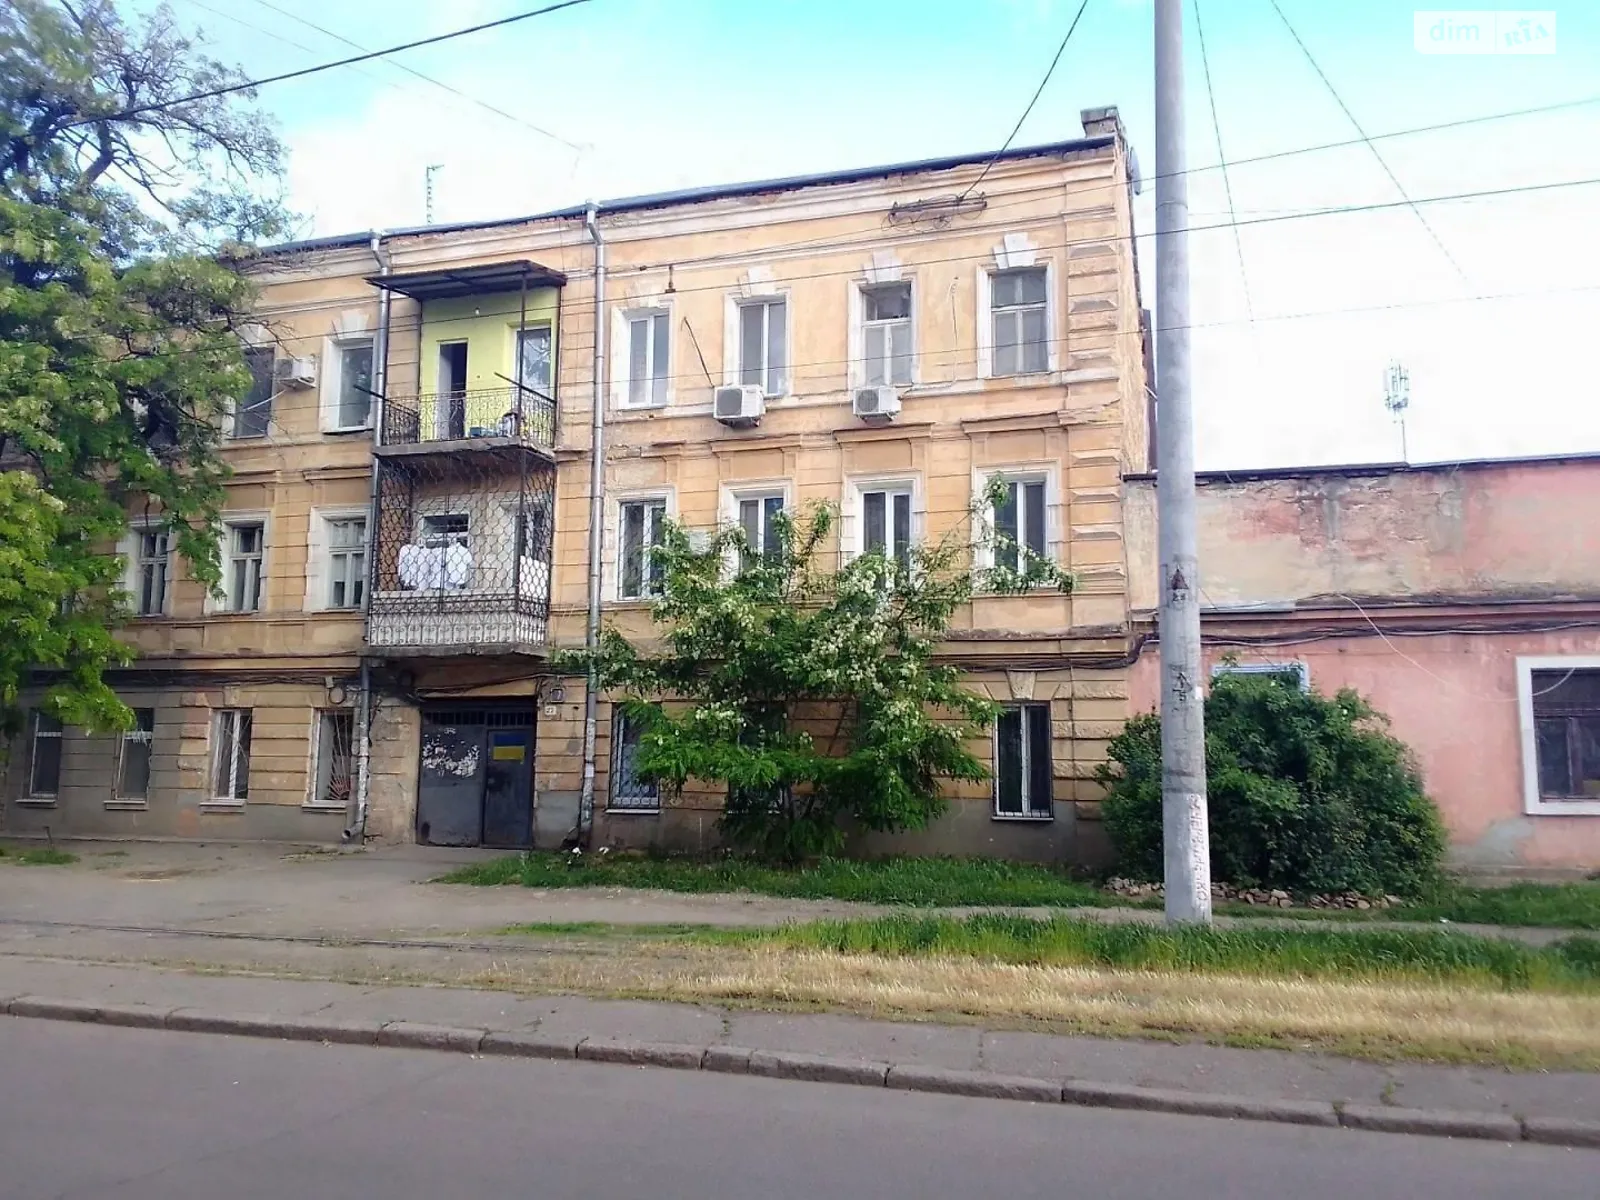 Продается комната 16.7 кв. м в Одессе, цена: 10000 $ - фото 1